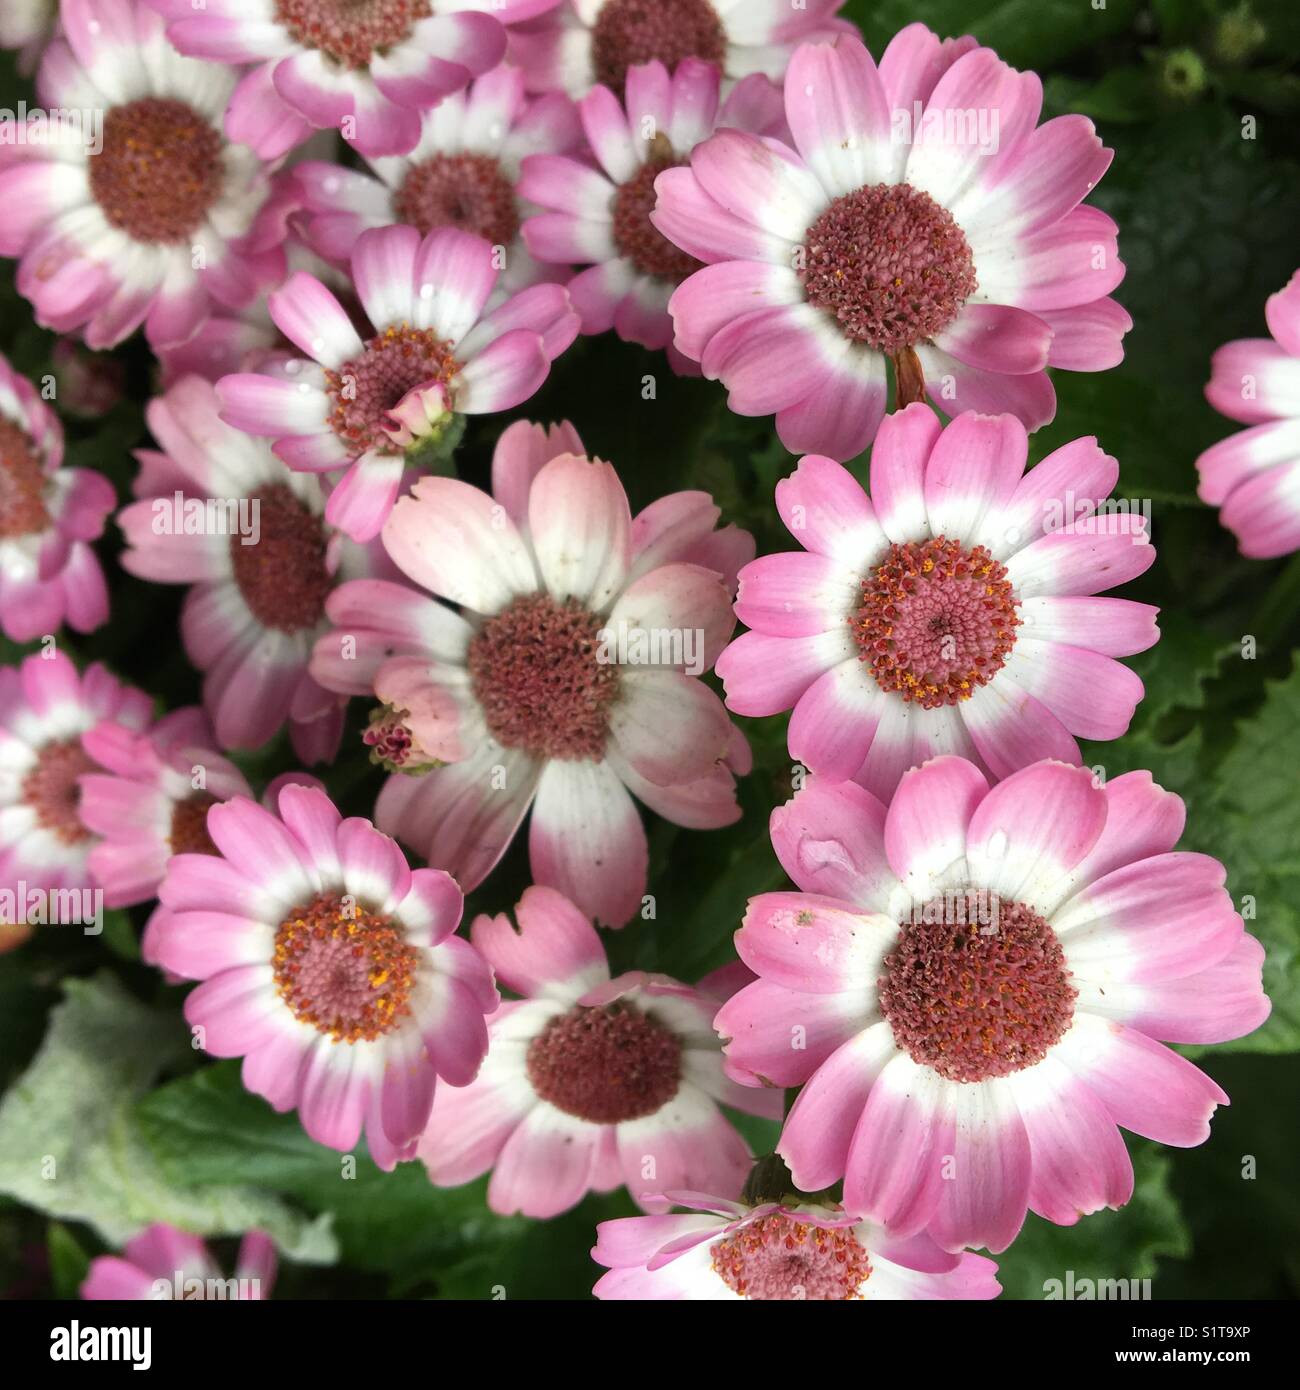 Pink Cineraria flowers in garden bed Stock Photo